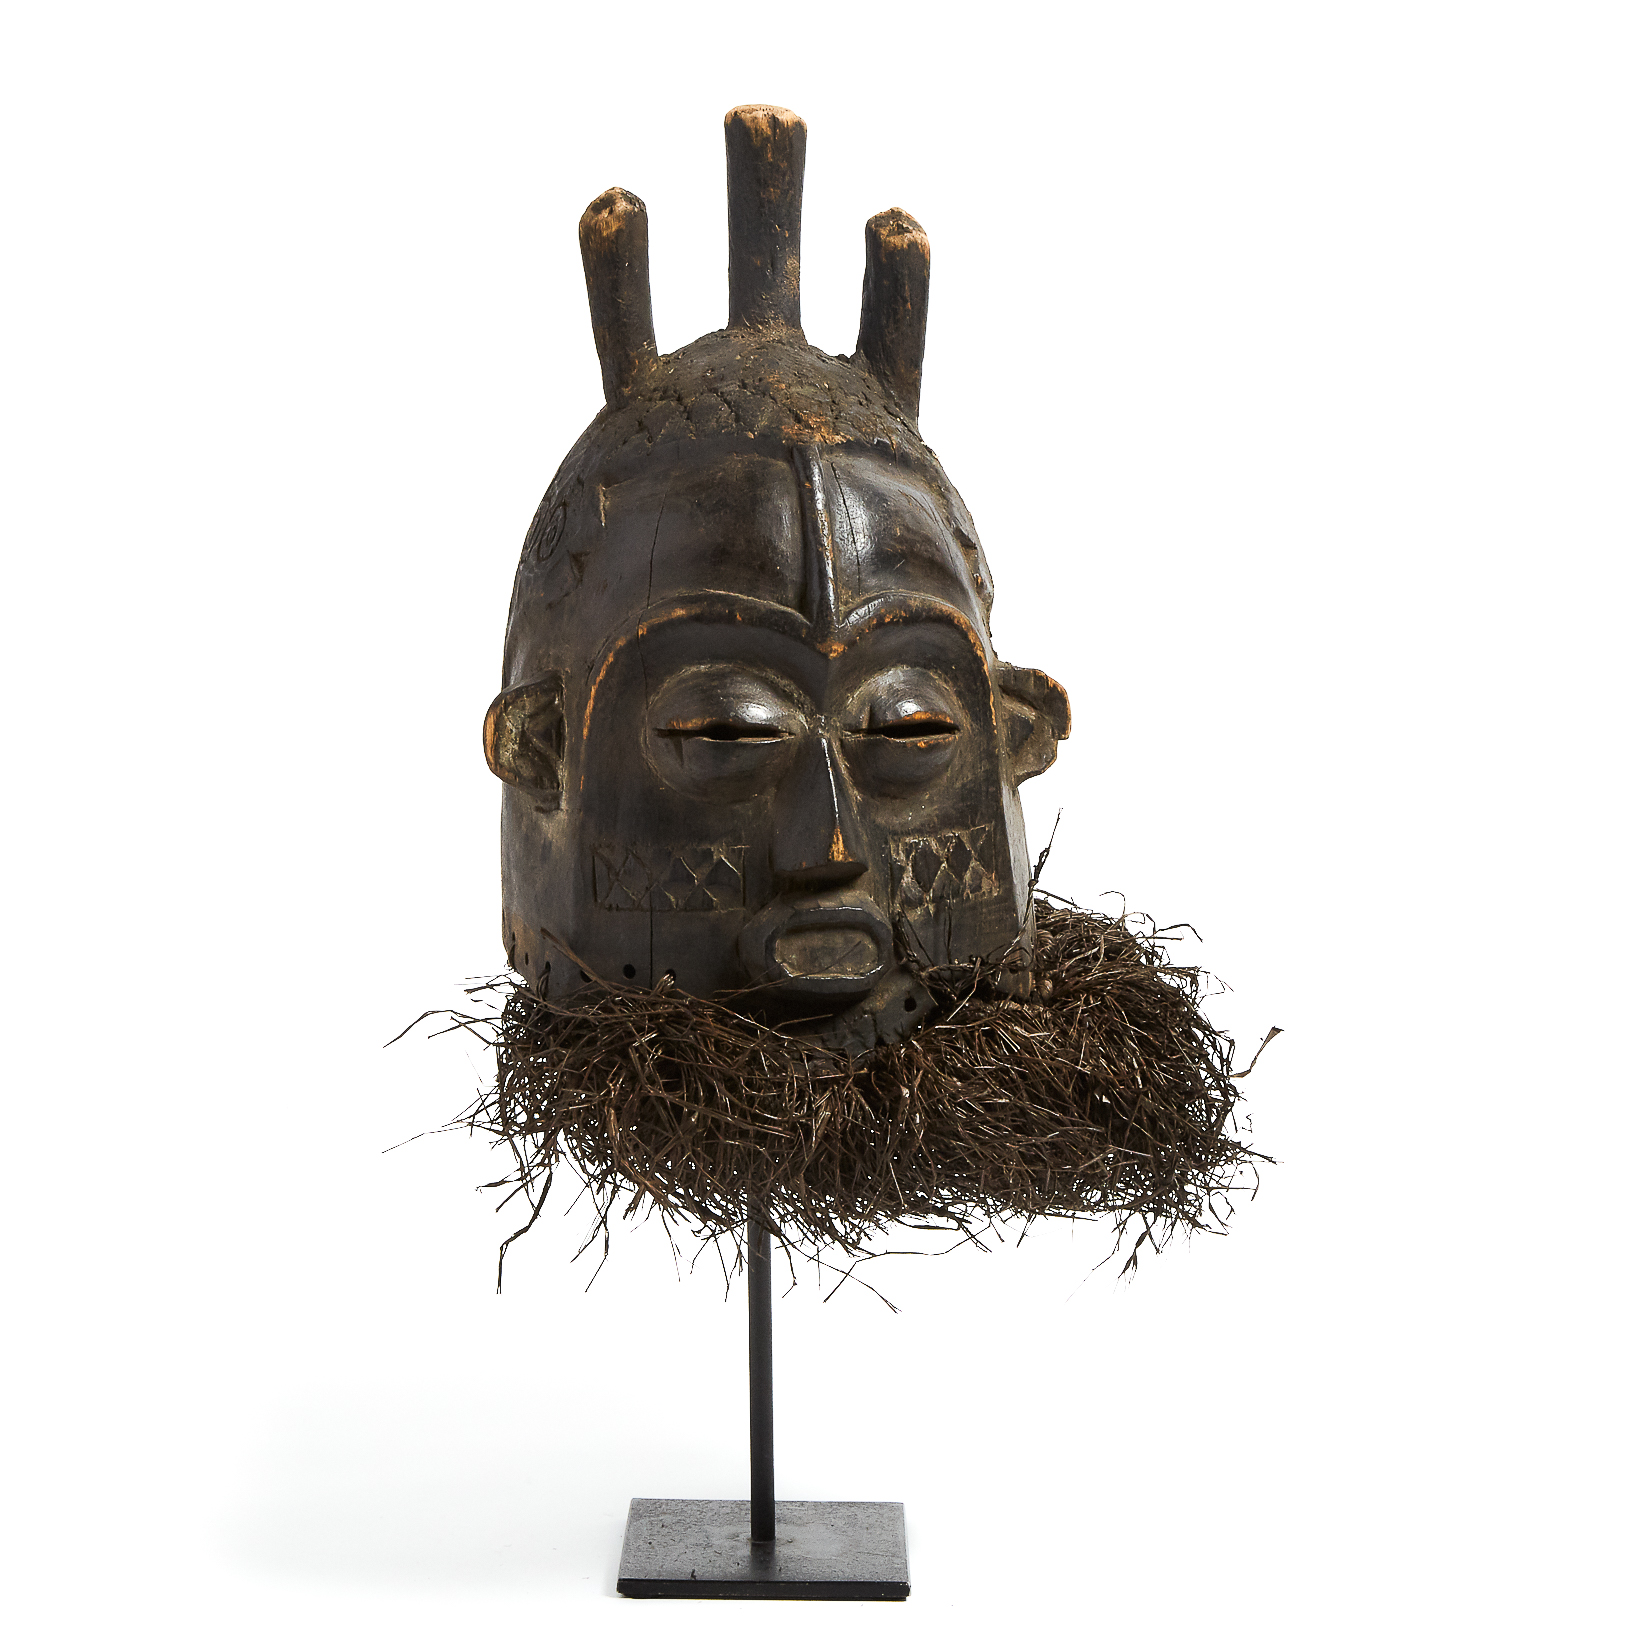 Kuba Helmet Mask, Democratic Republic of Congo, Central Africa